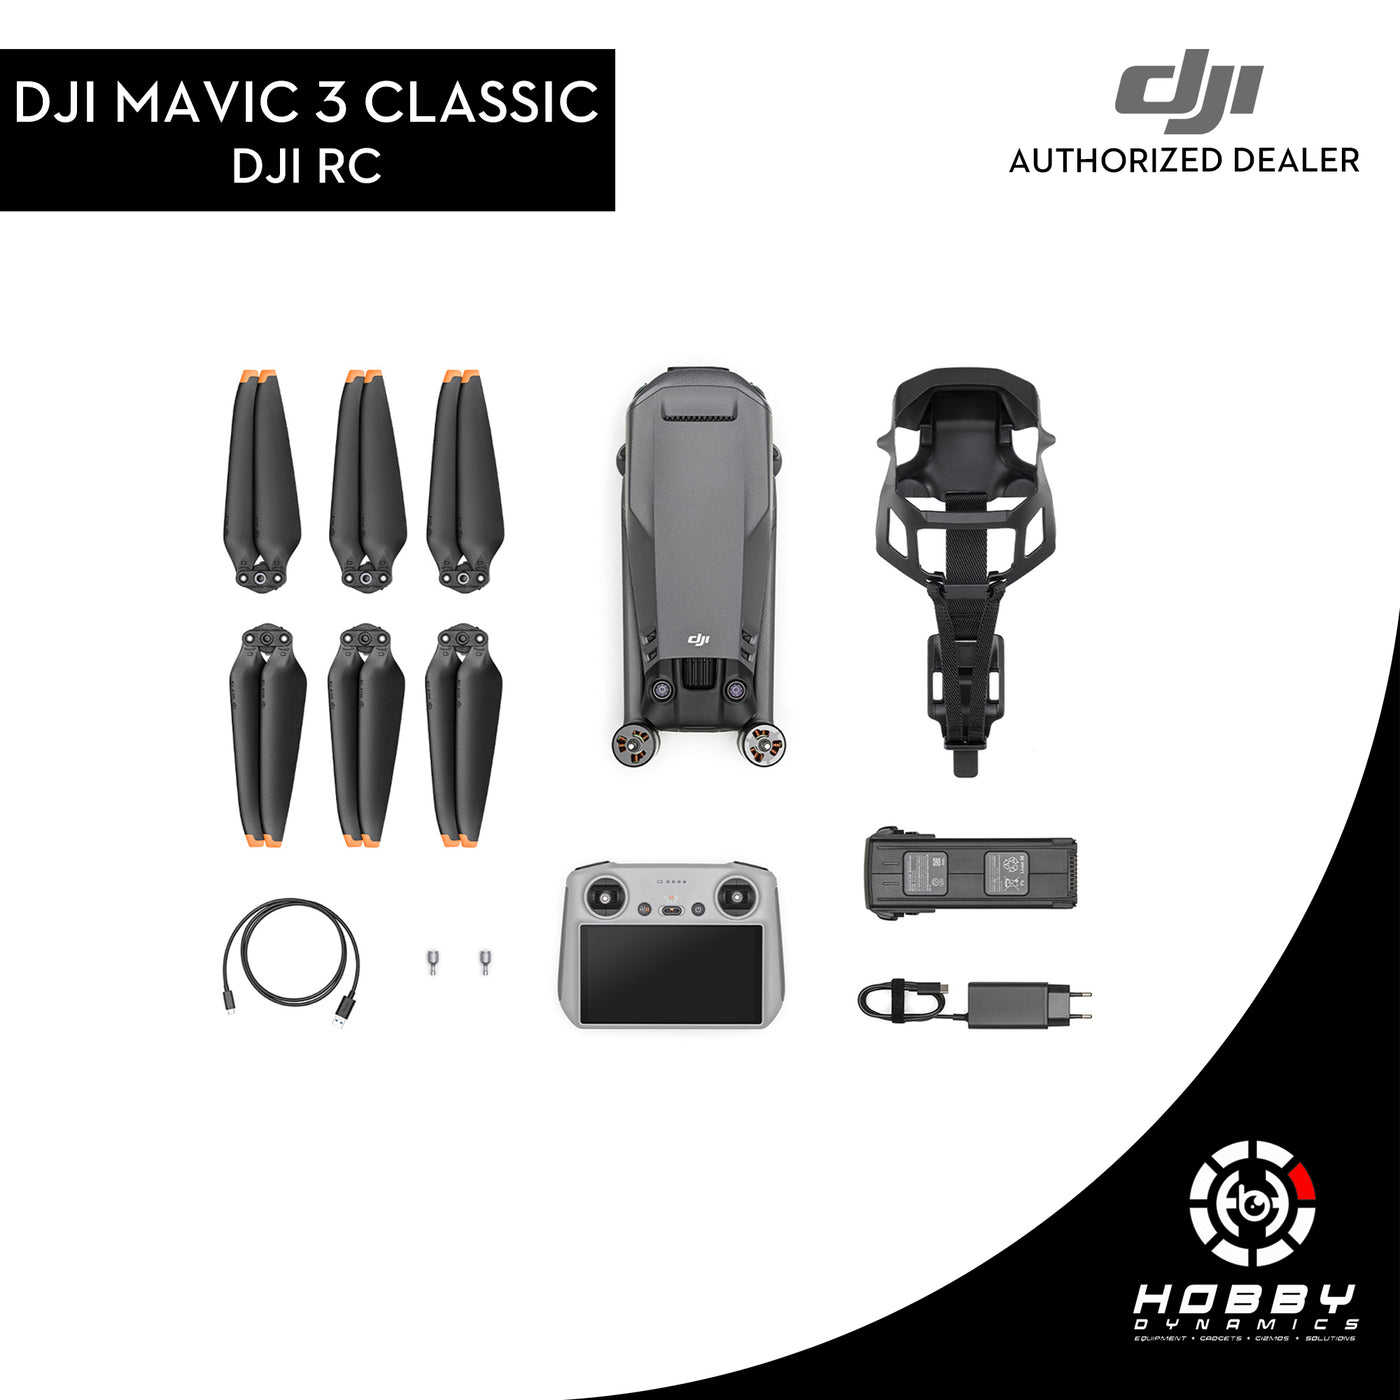 DJI Mavic 3 Classic (DJI RC) with with FREE Sandisk Extreme 64GB SD Card